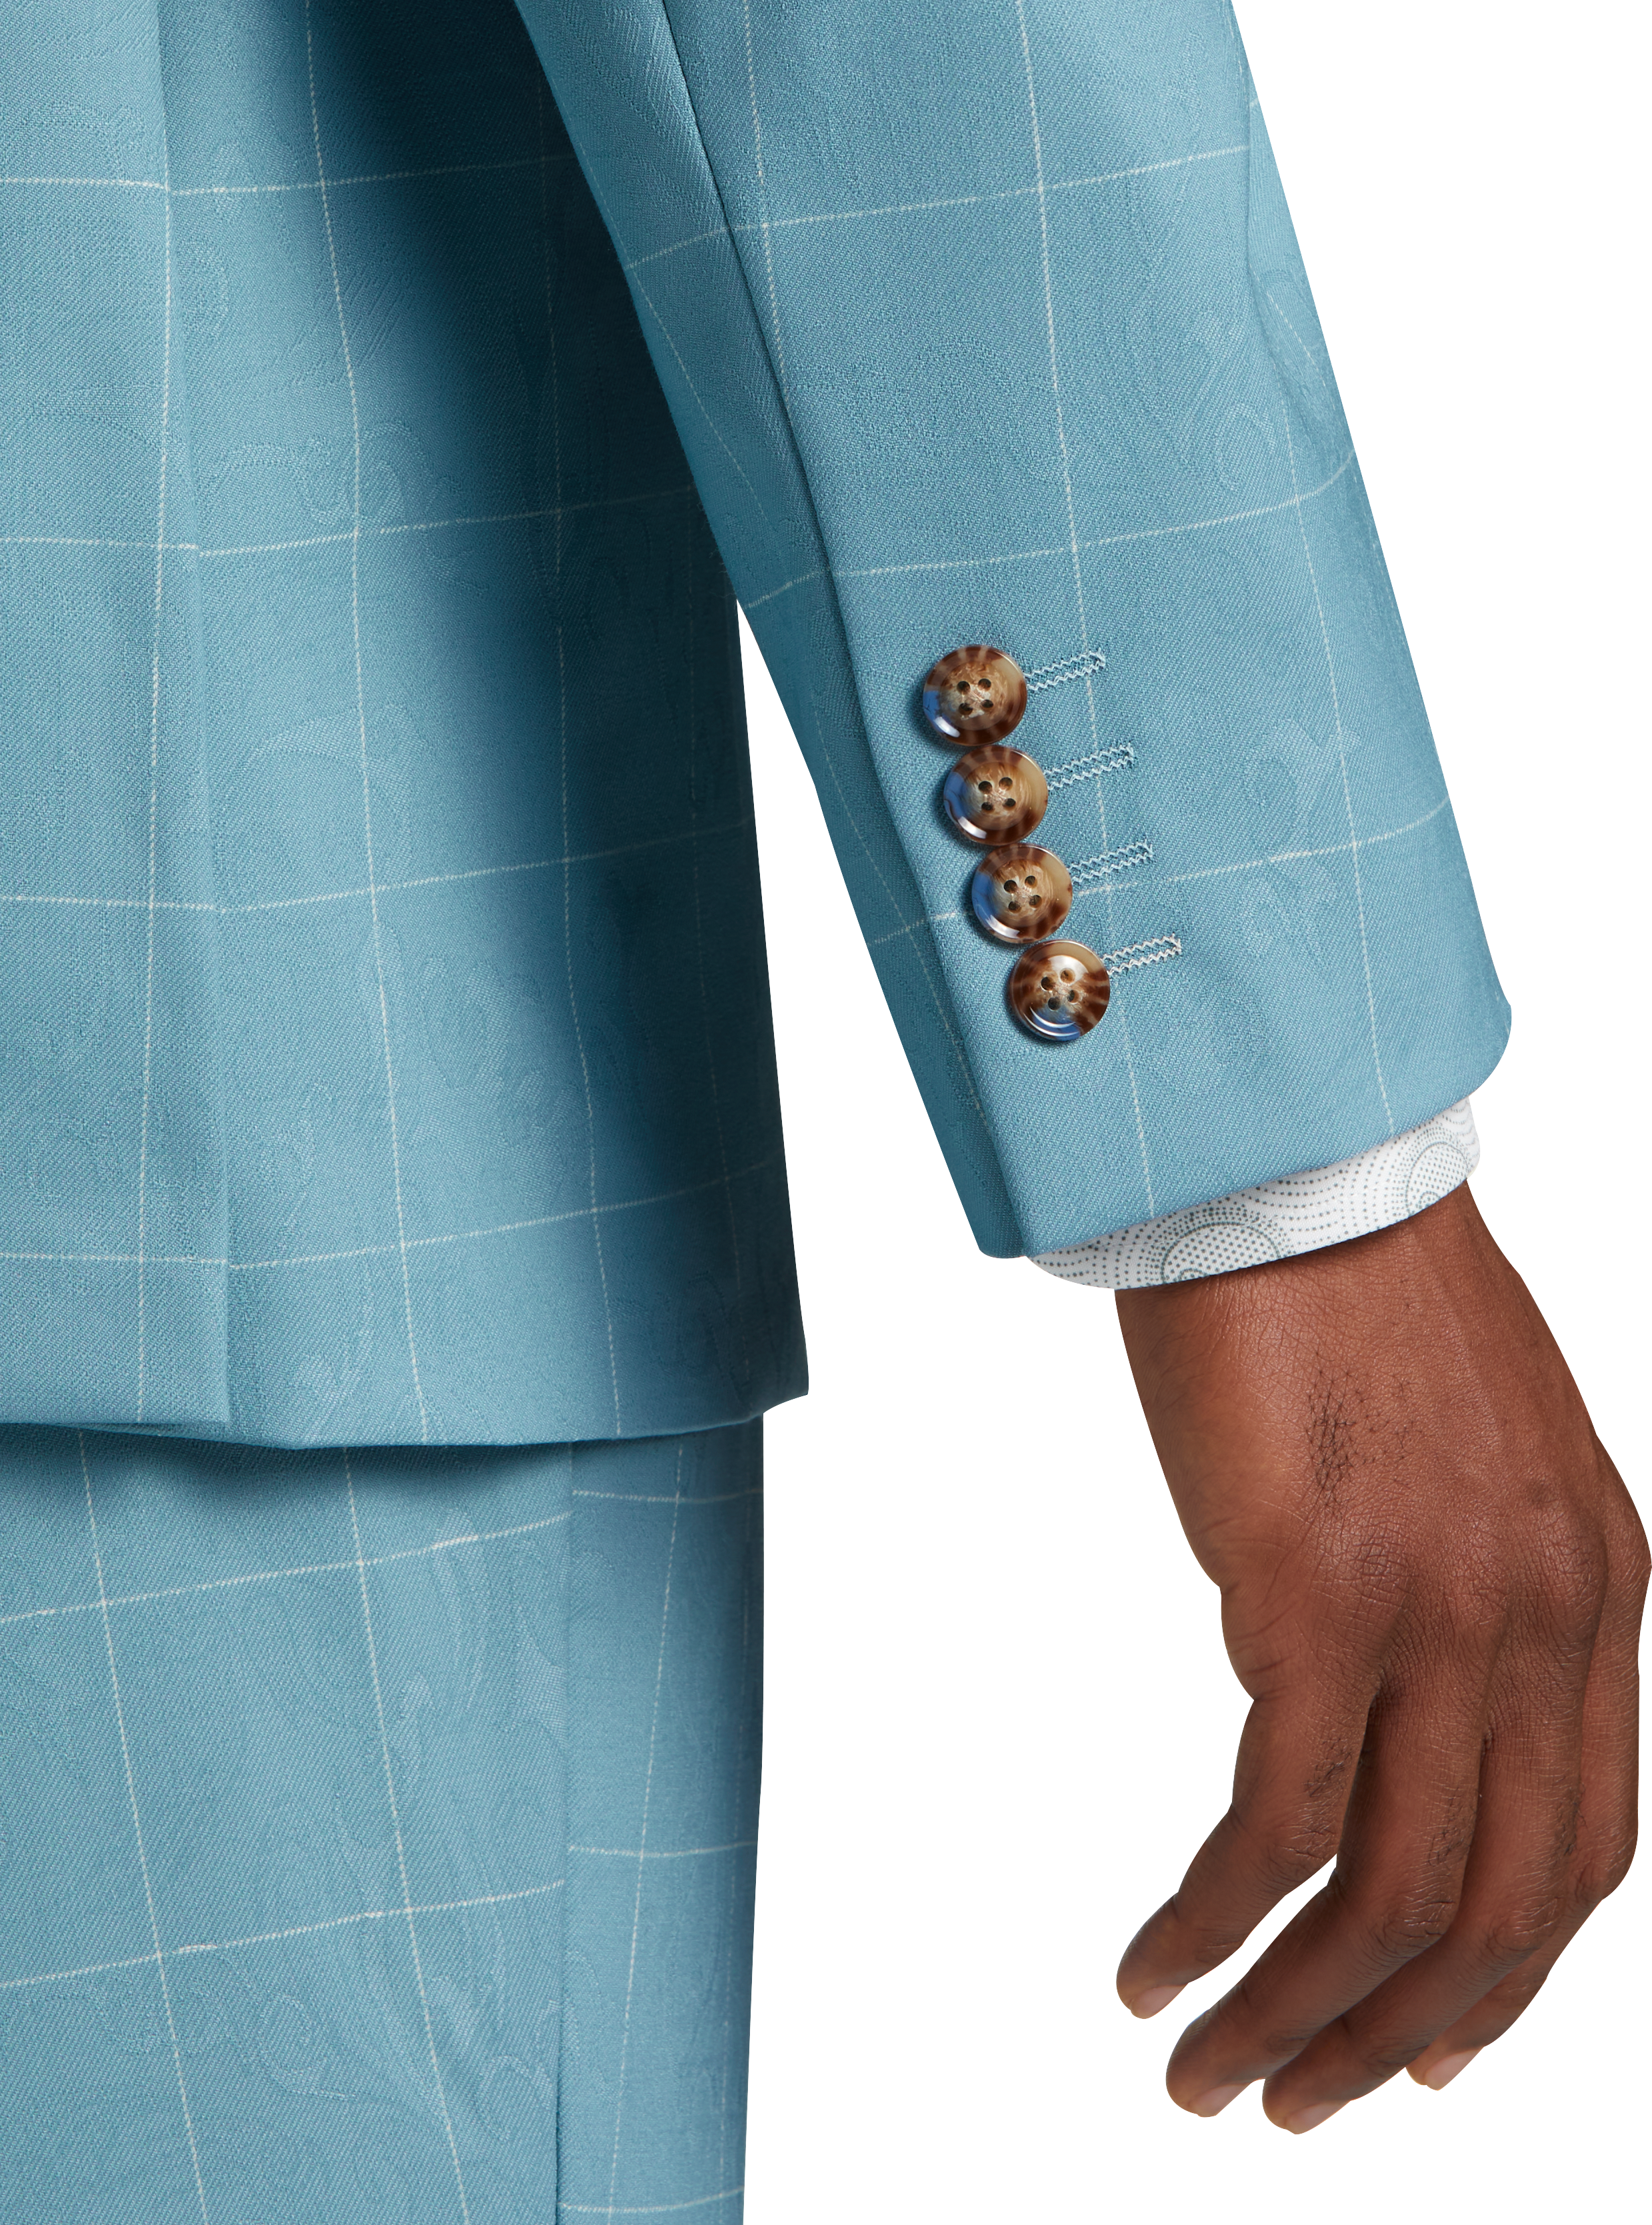 Classic Fit Peak Lapel Windowpane Plaid Suit Separates Jacket